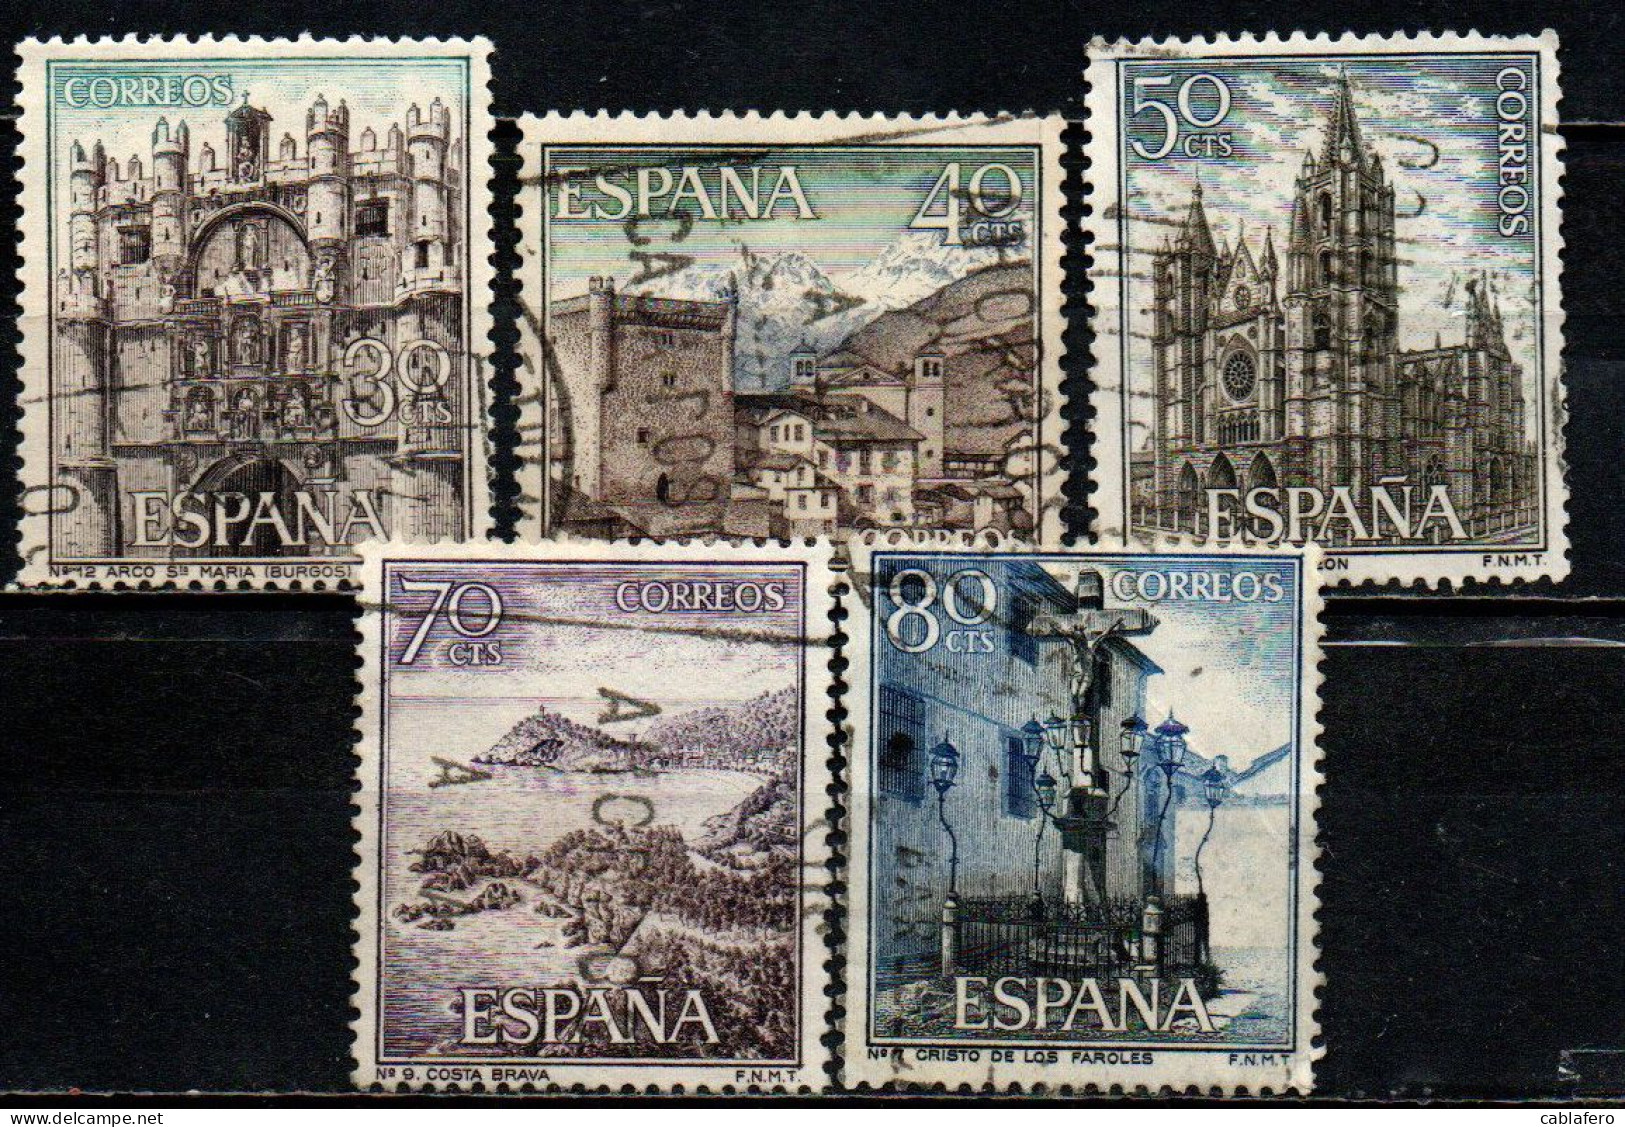 SPAGNA - 1964 - IL TURISMO IN SPAGNA - USATI - Used Stamps